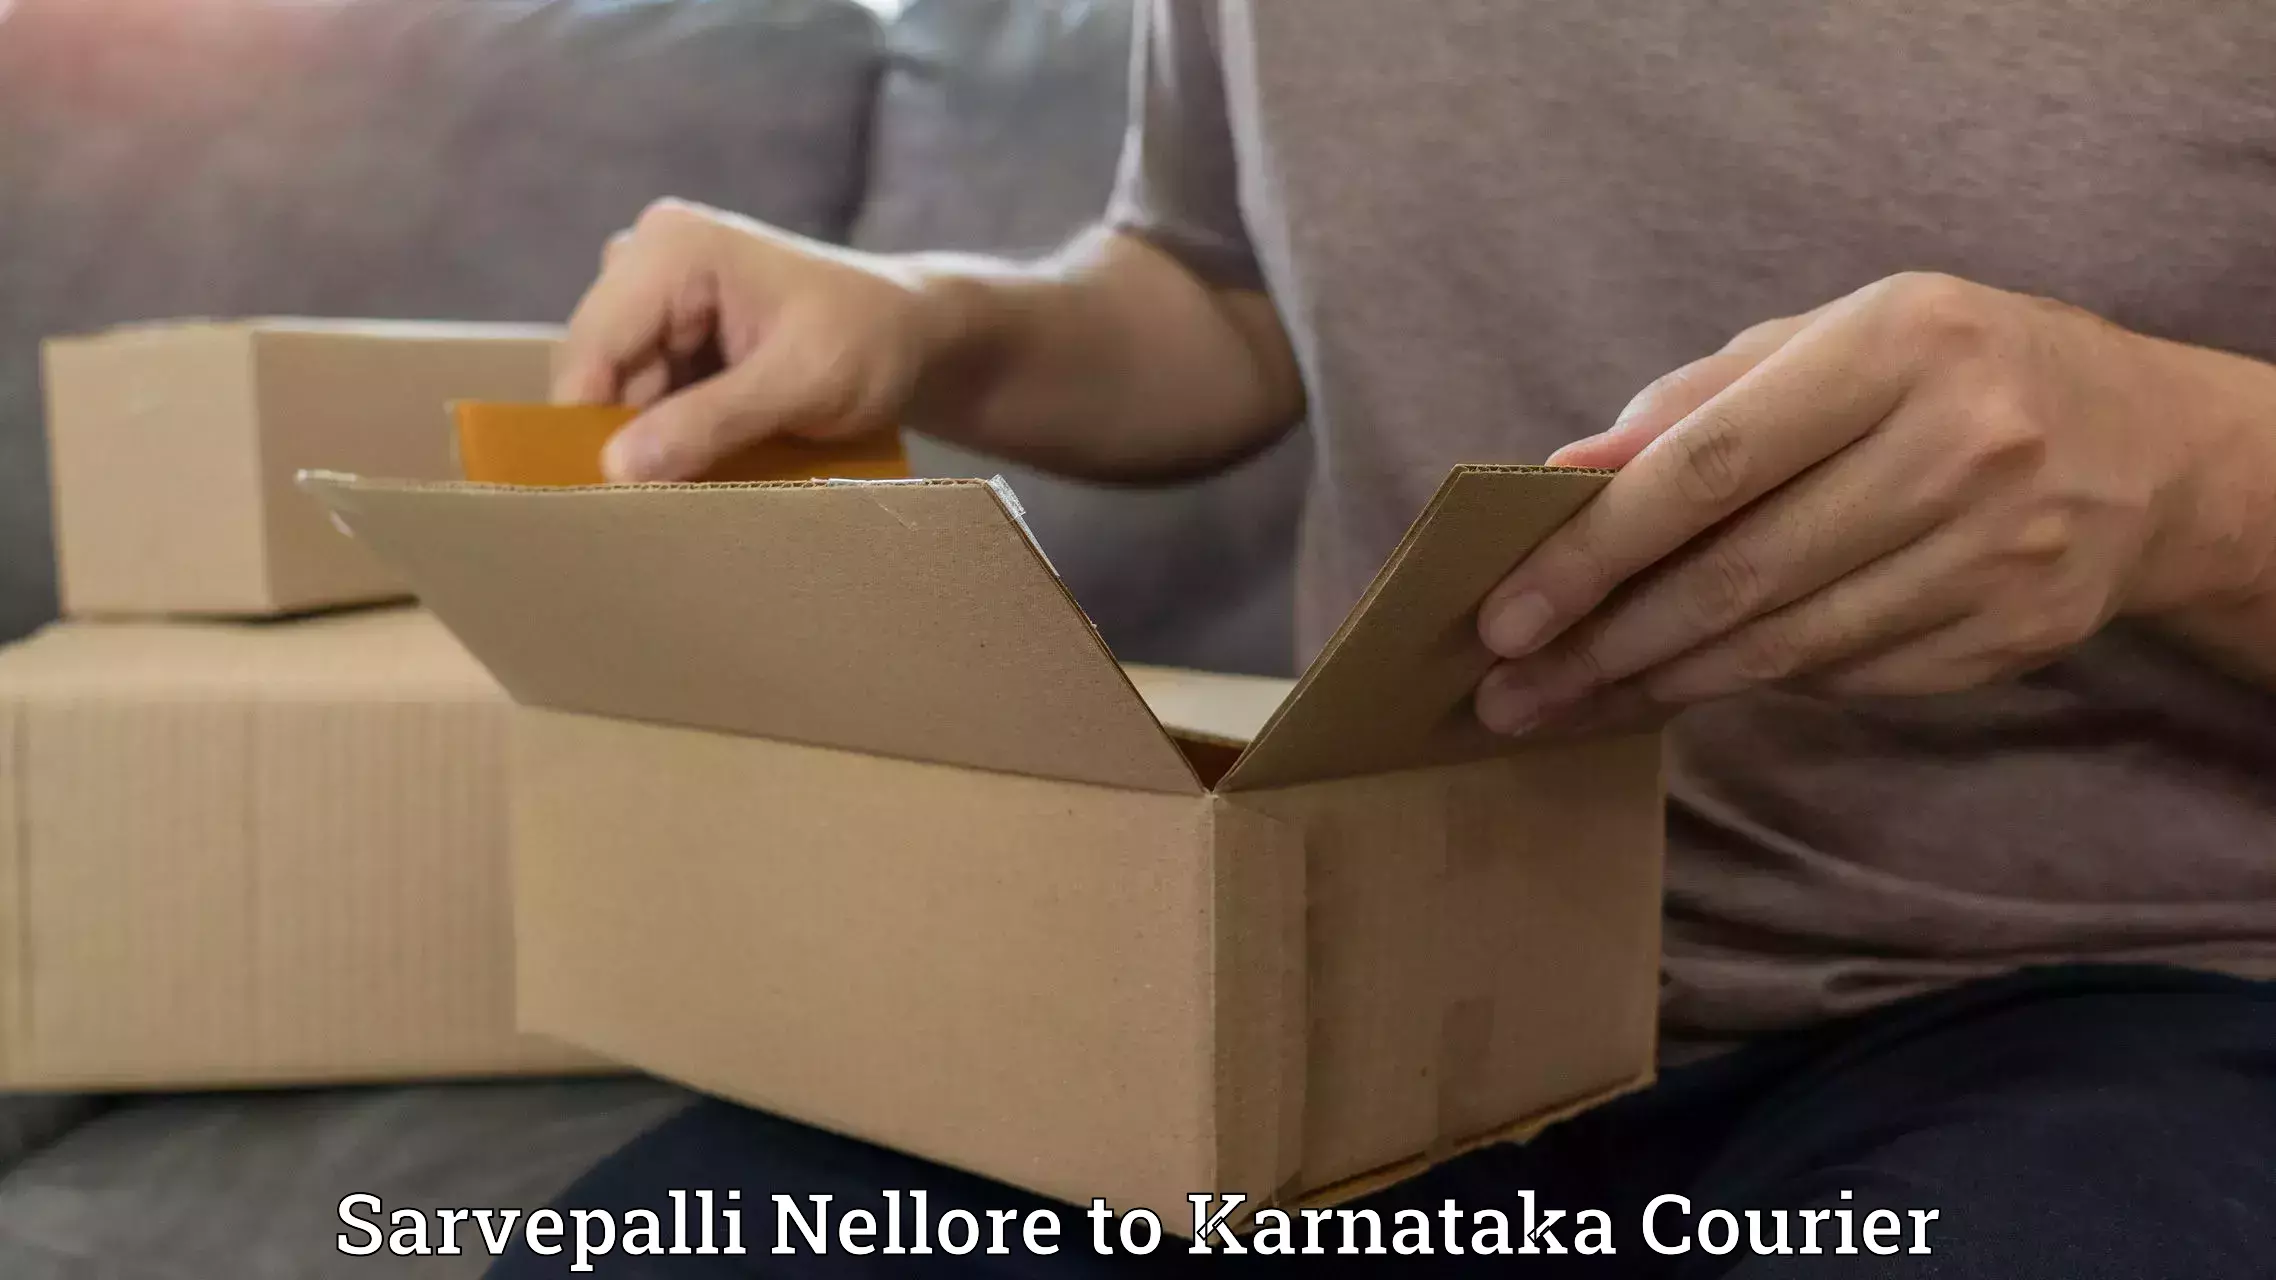 Reliable courier service Sarvepalli Nellore to Karnataka